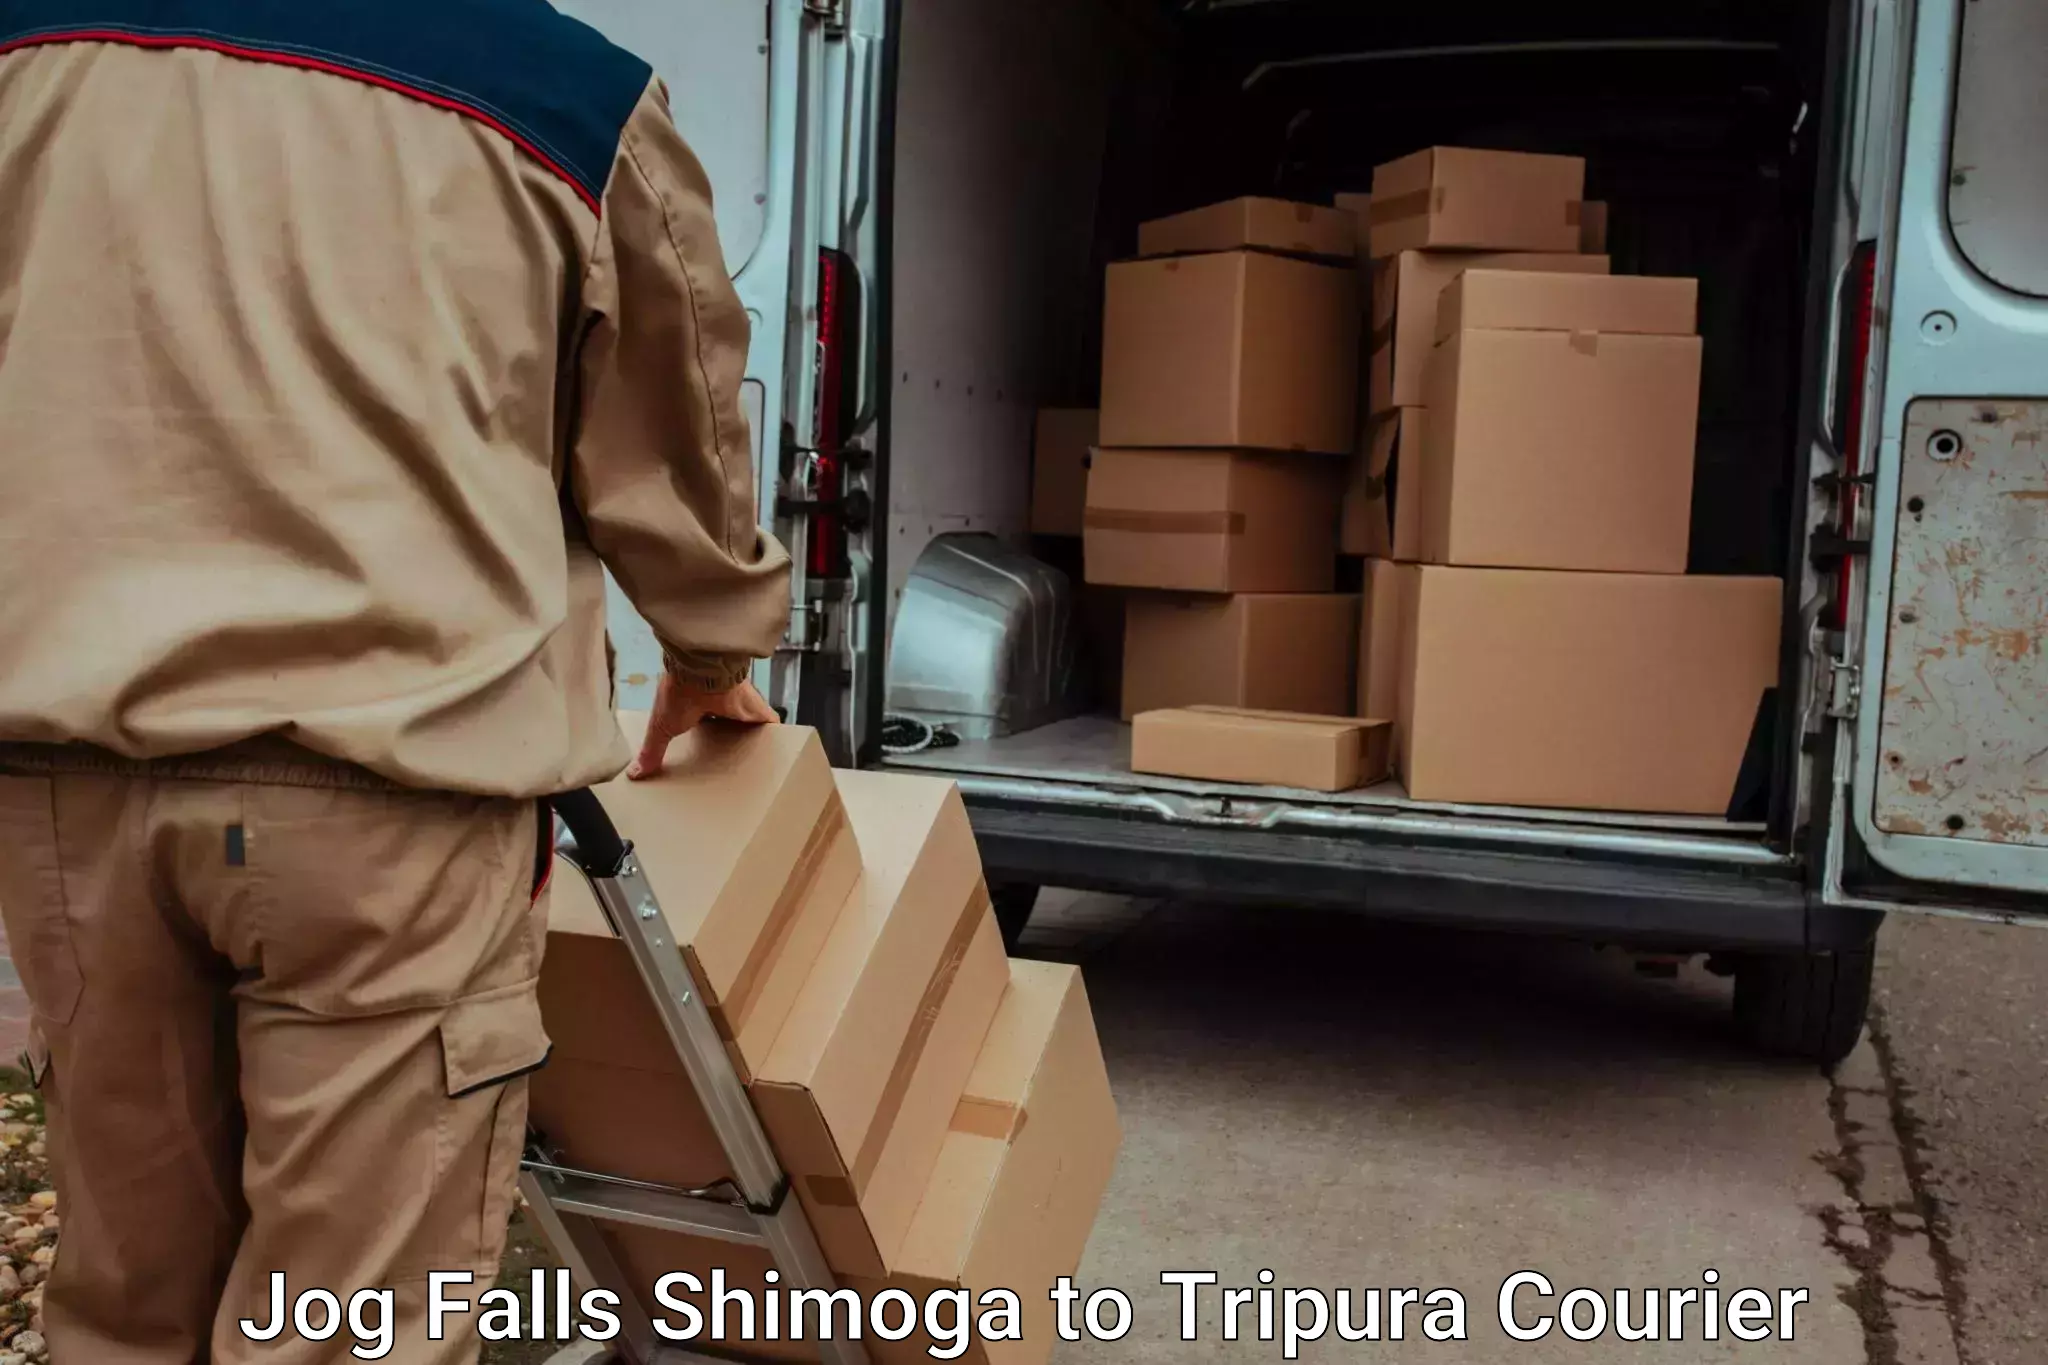 Luggage transfer service Jog Falls Shimoga to Udaipur Tripura